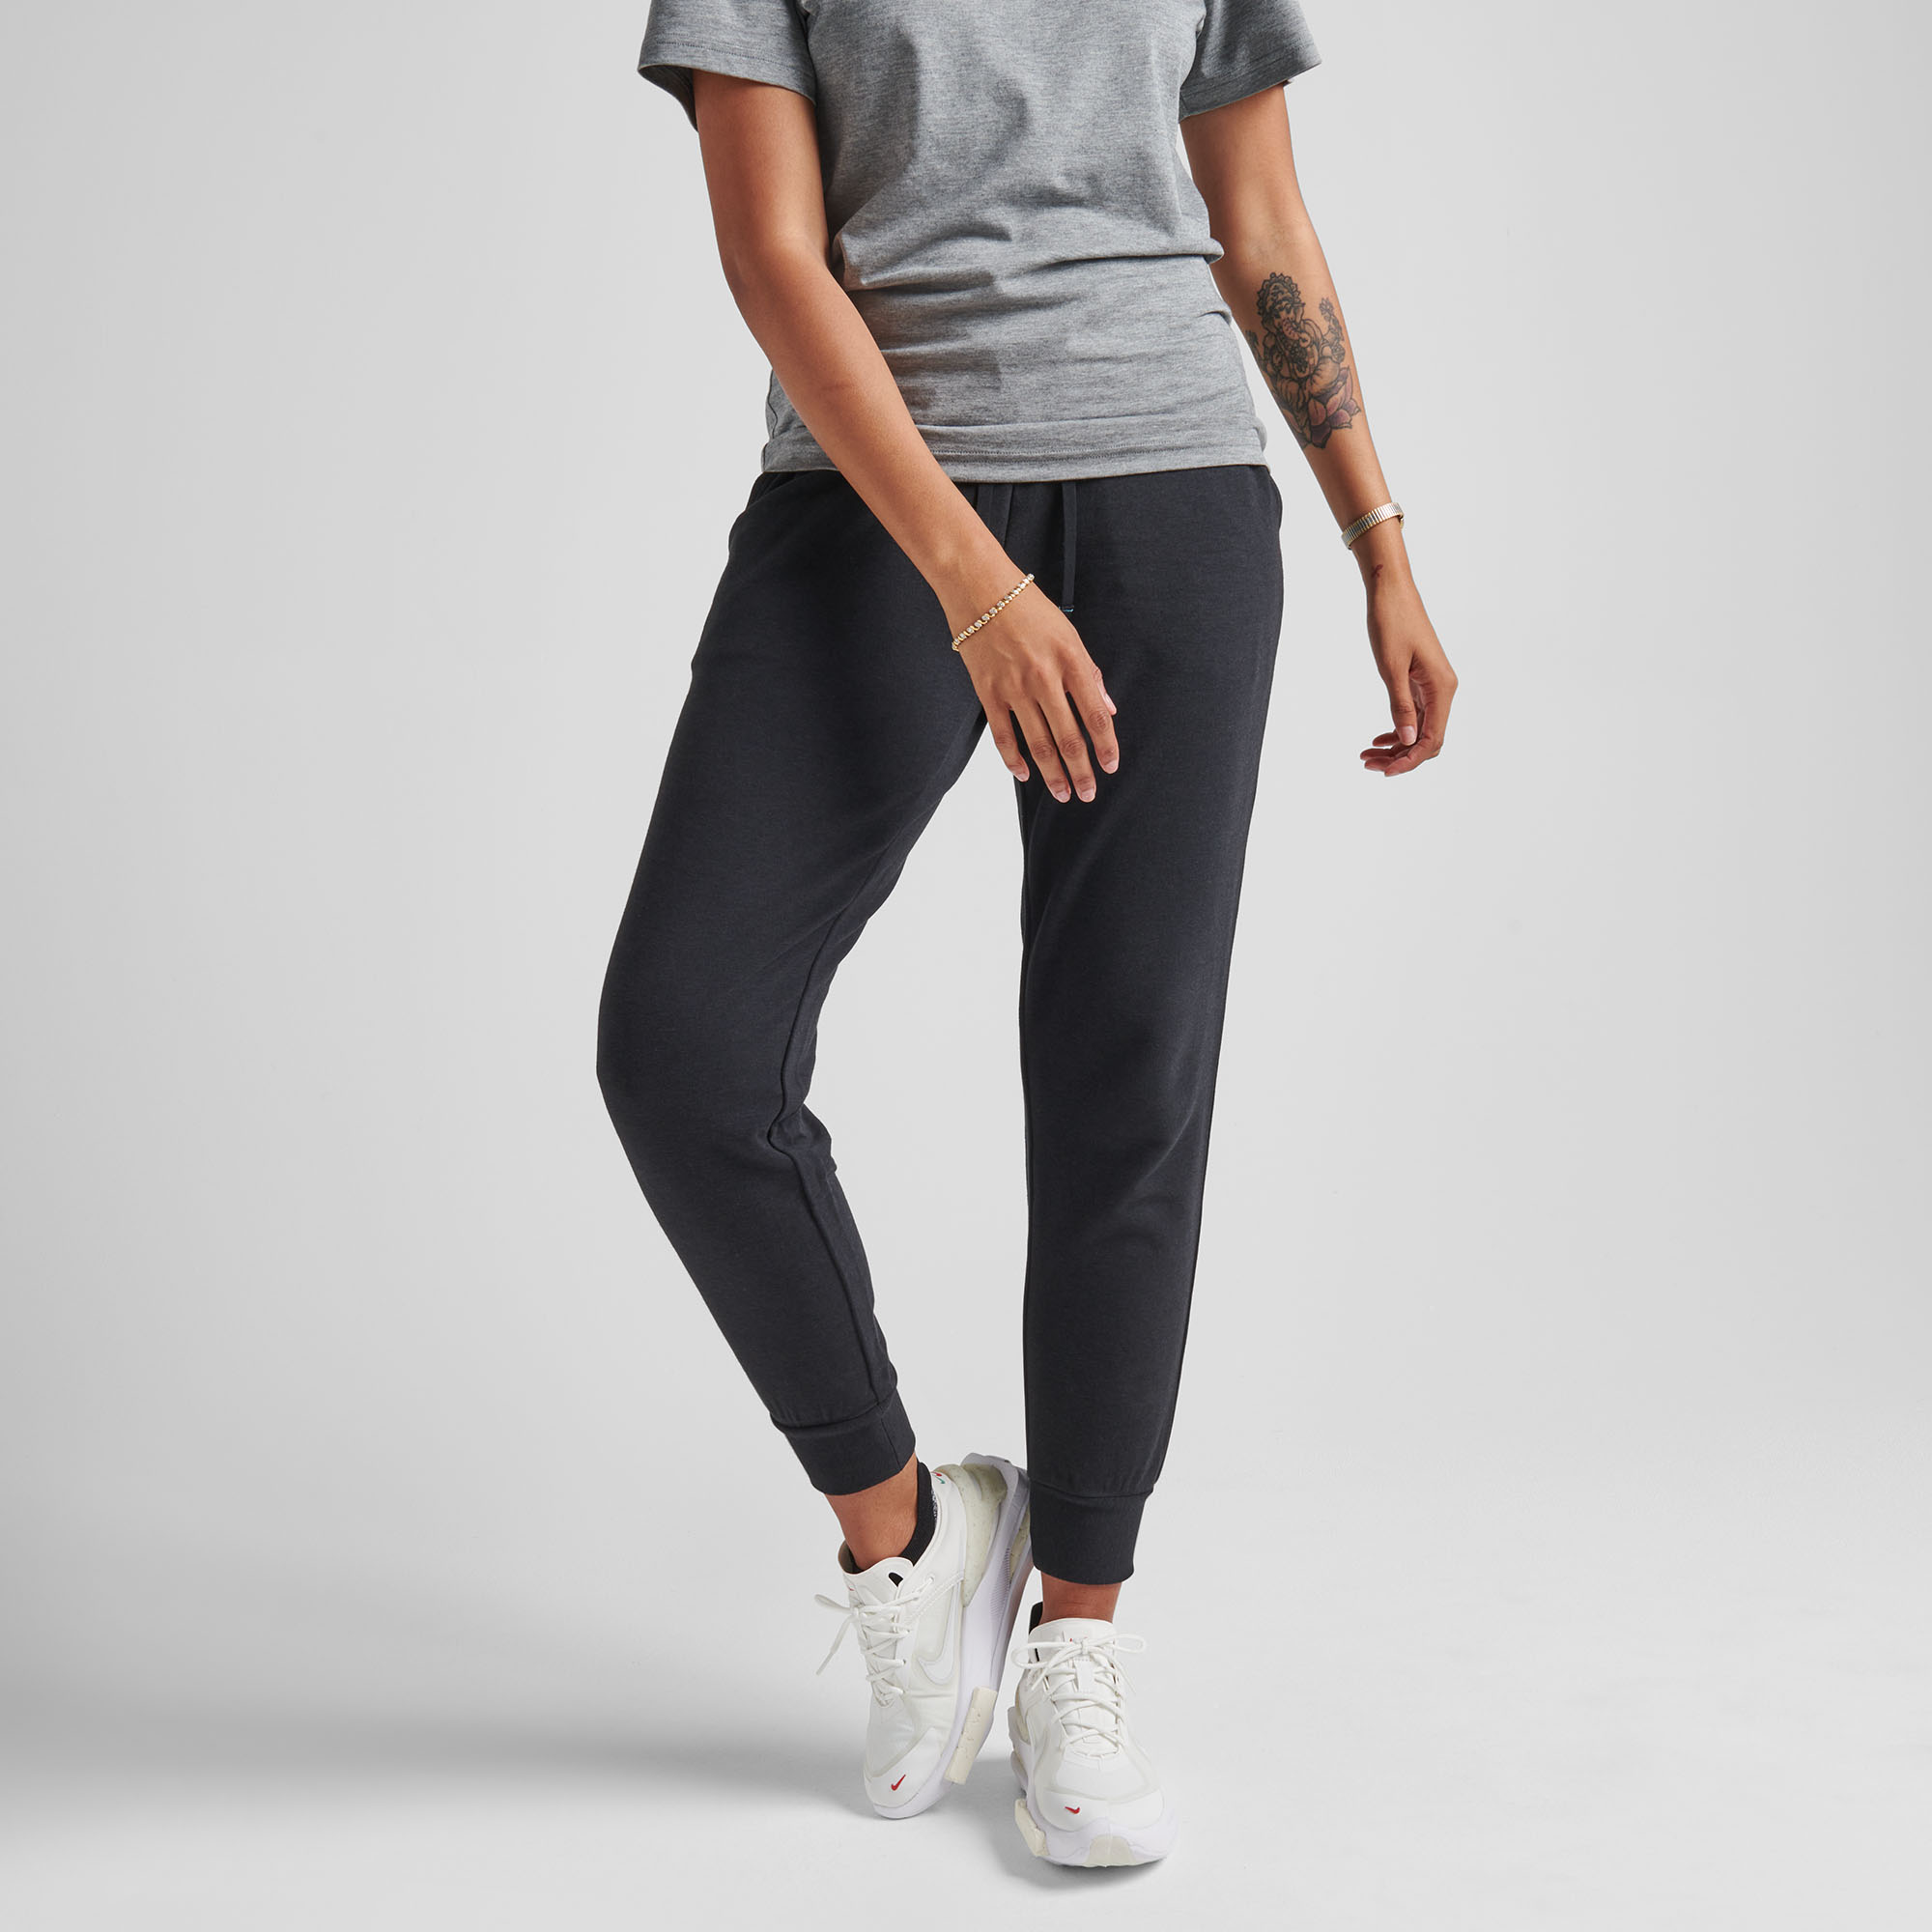 Lululemon Ready to Fleece High-Rise Jogger Women's Black Pants